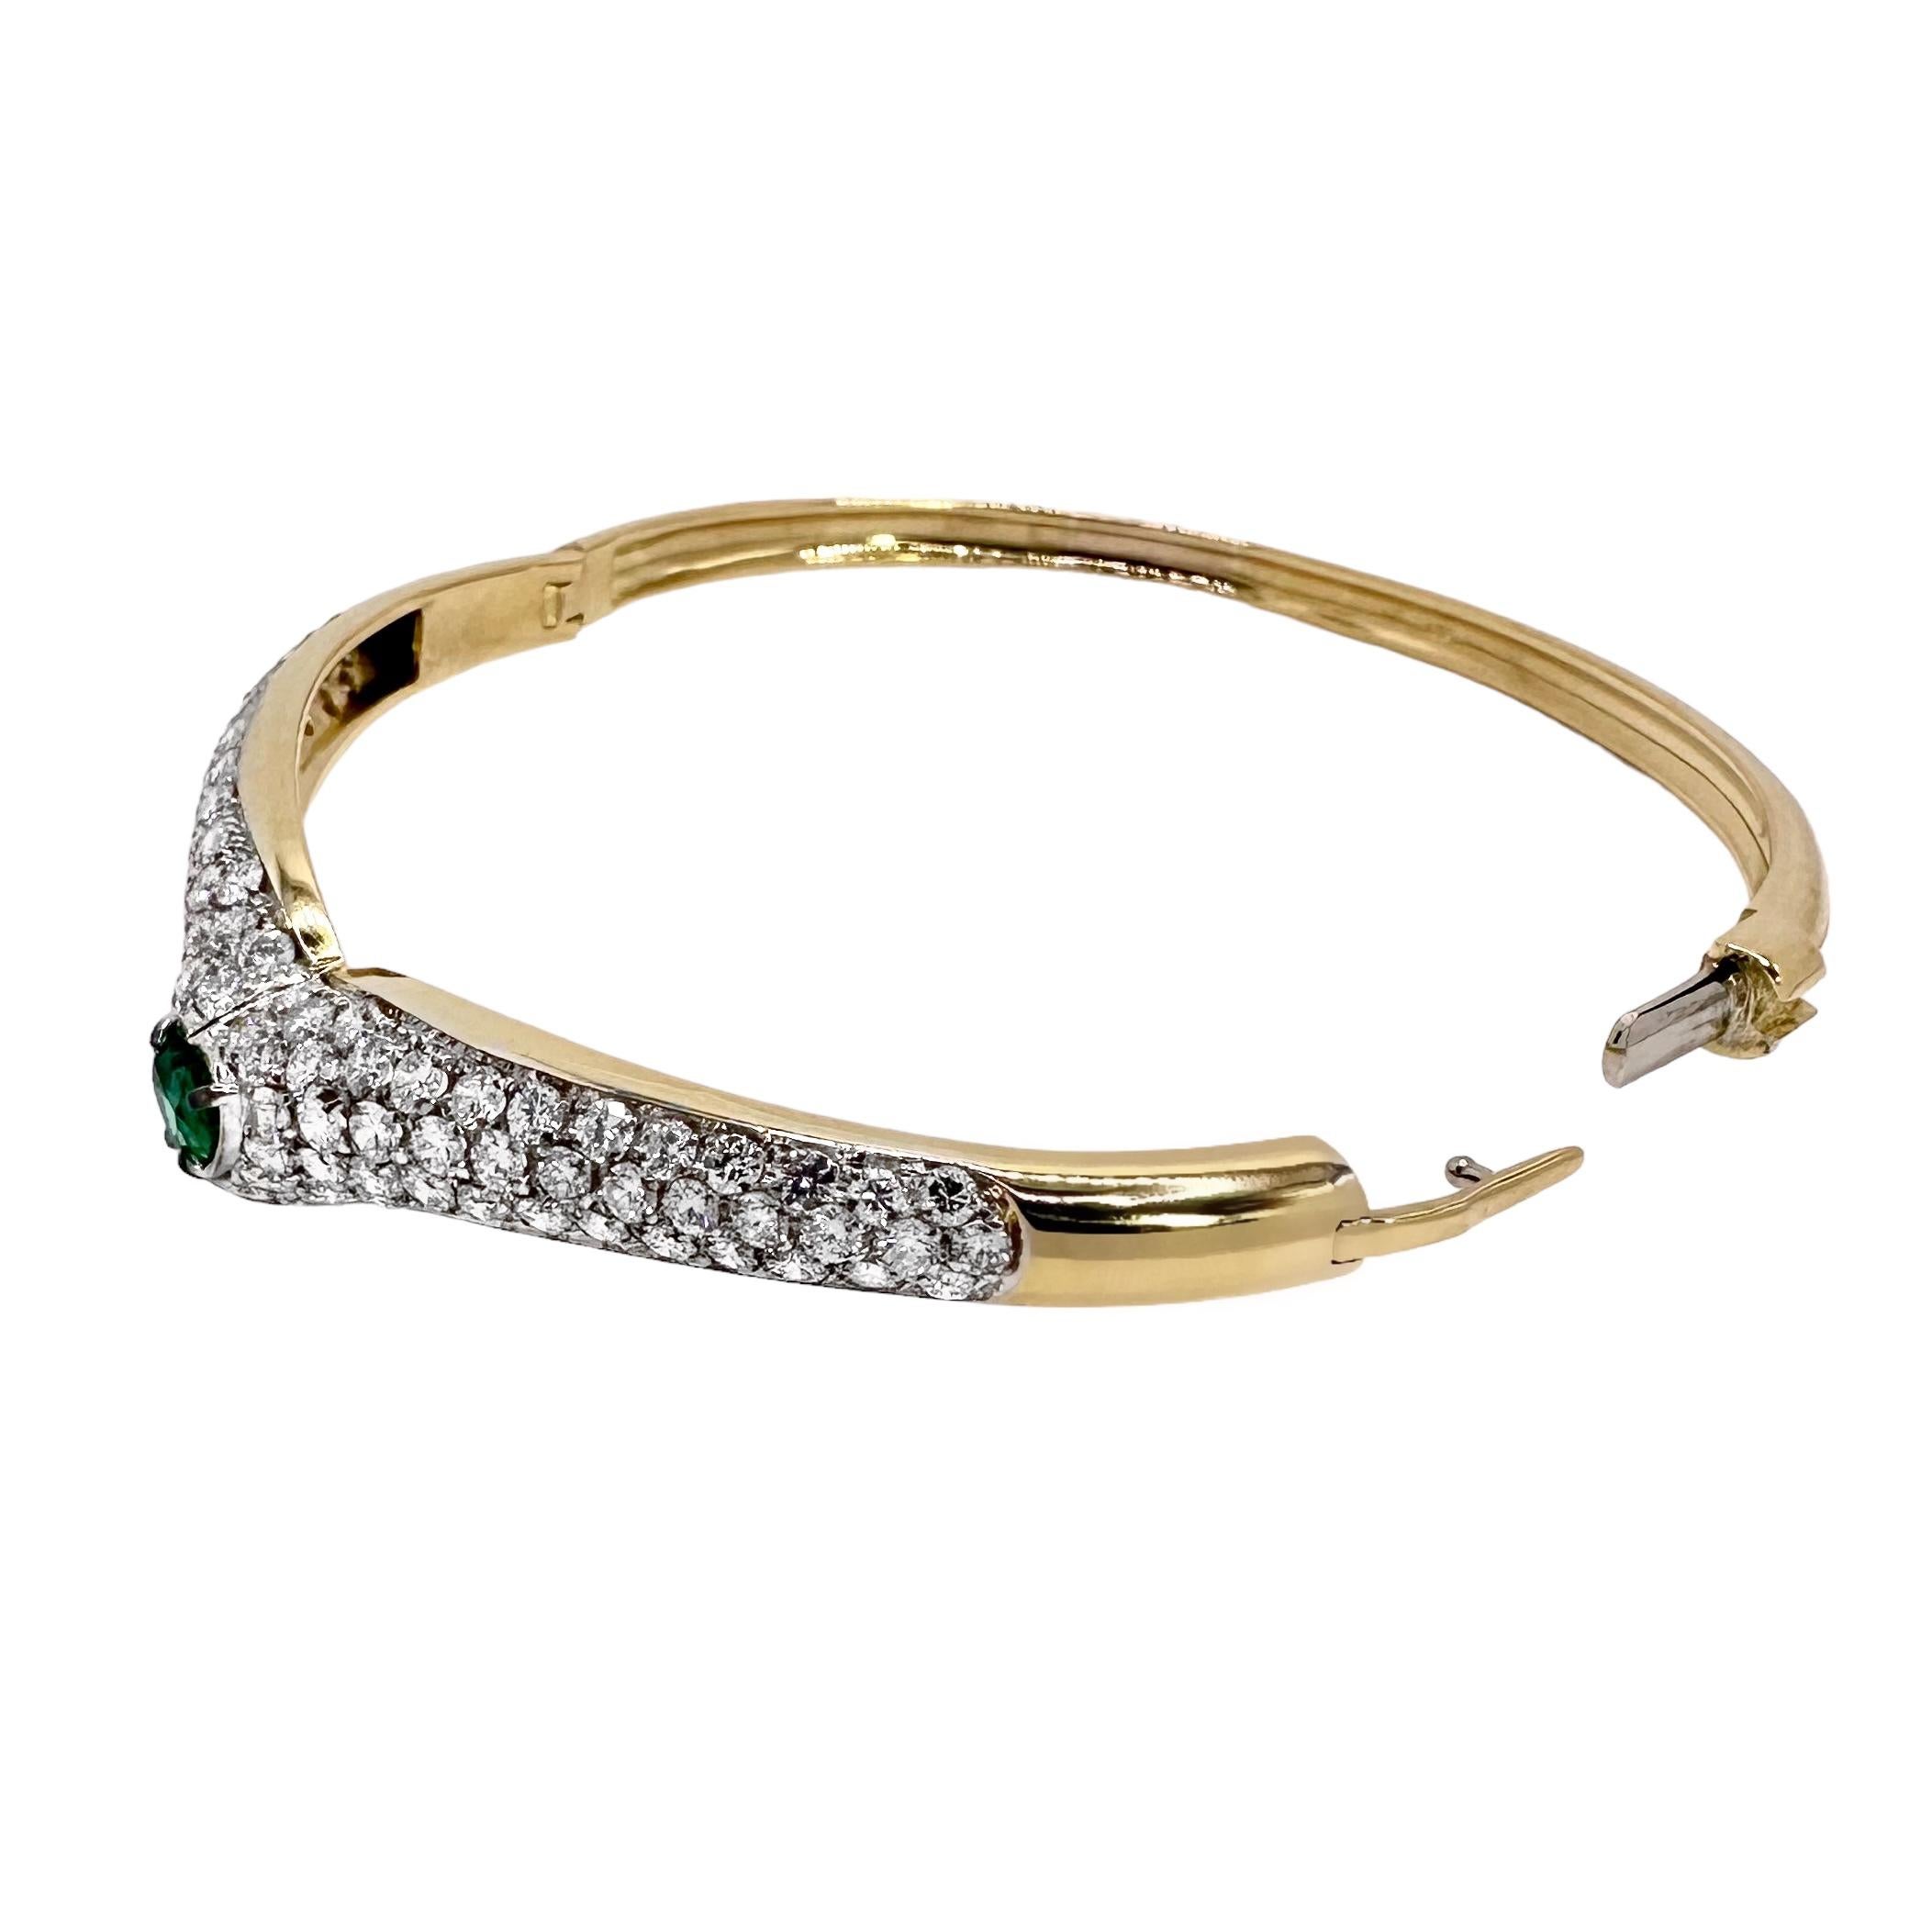  Stylish 18k Gold Bangle Bracelet with Heart Shaped Emerald and Diamonds For Sale 1